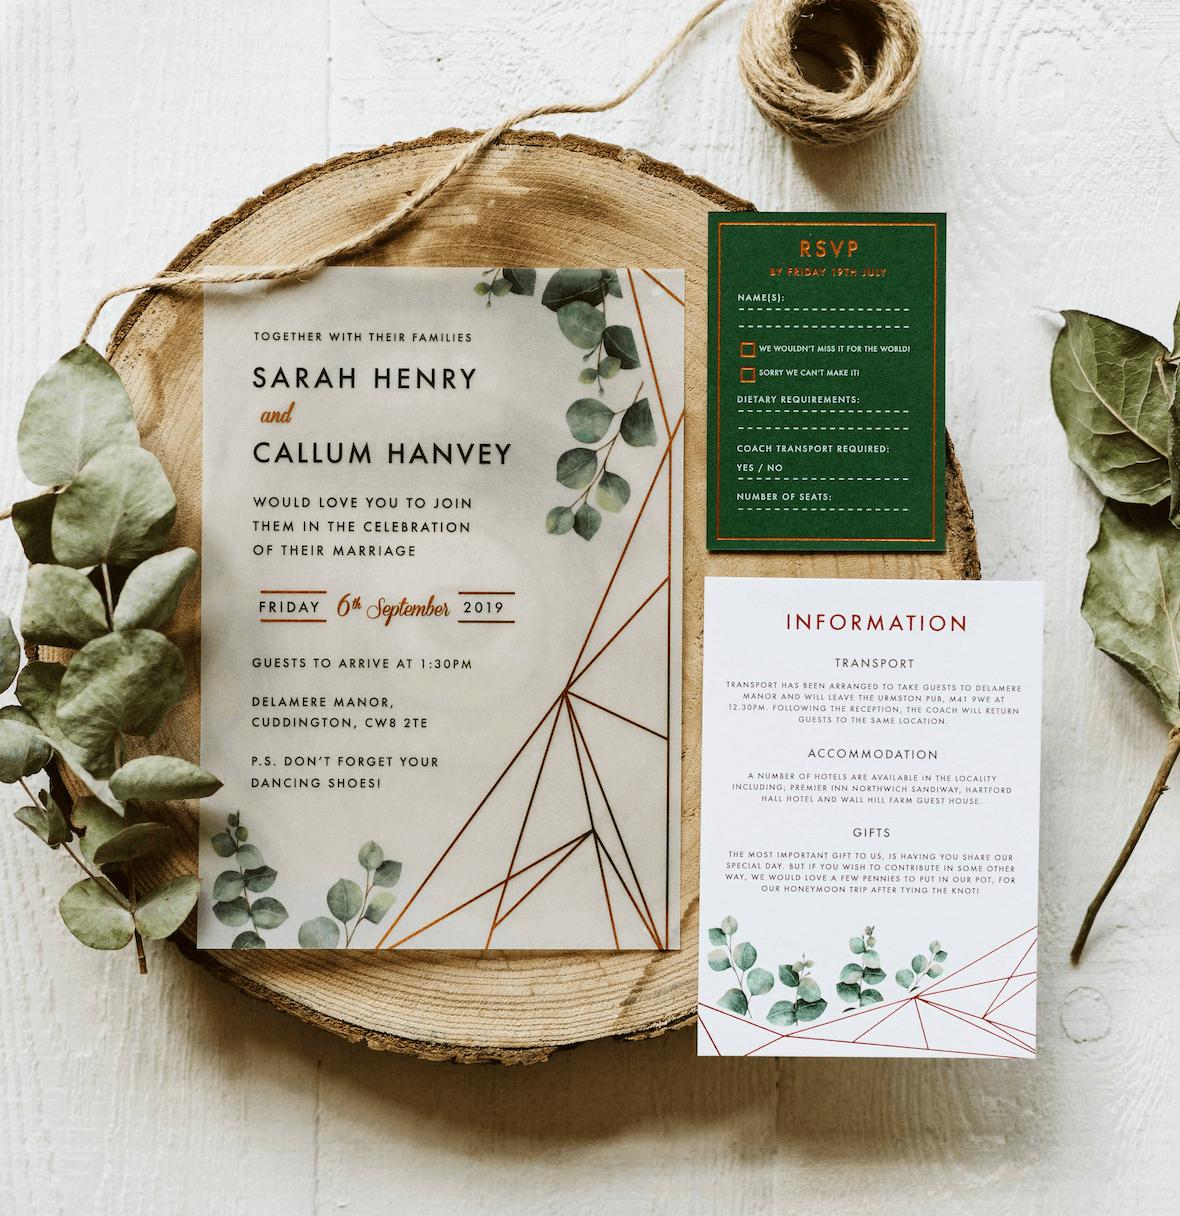 40 Elegant Wedding Invitations Ideas - Marriage Invitation Card Designs